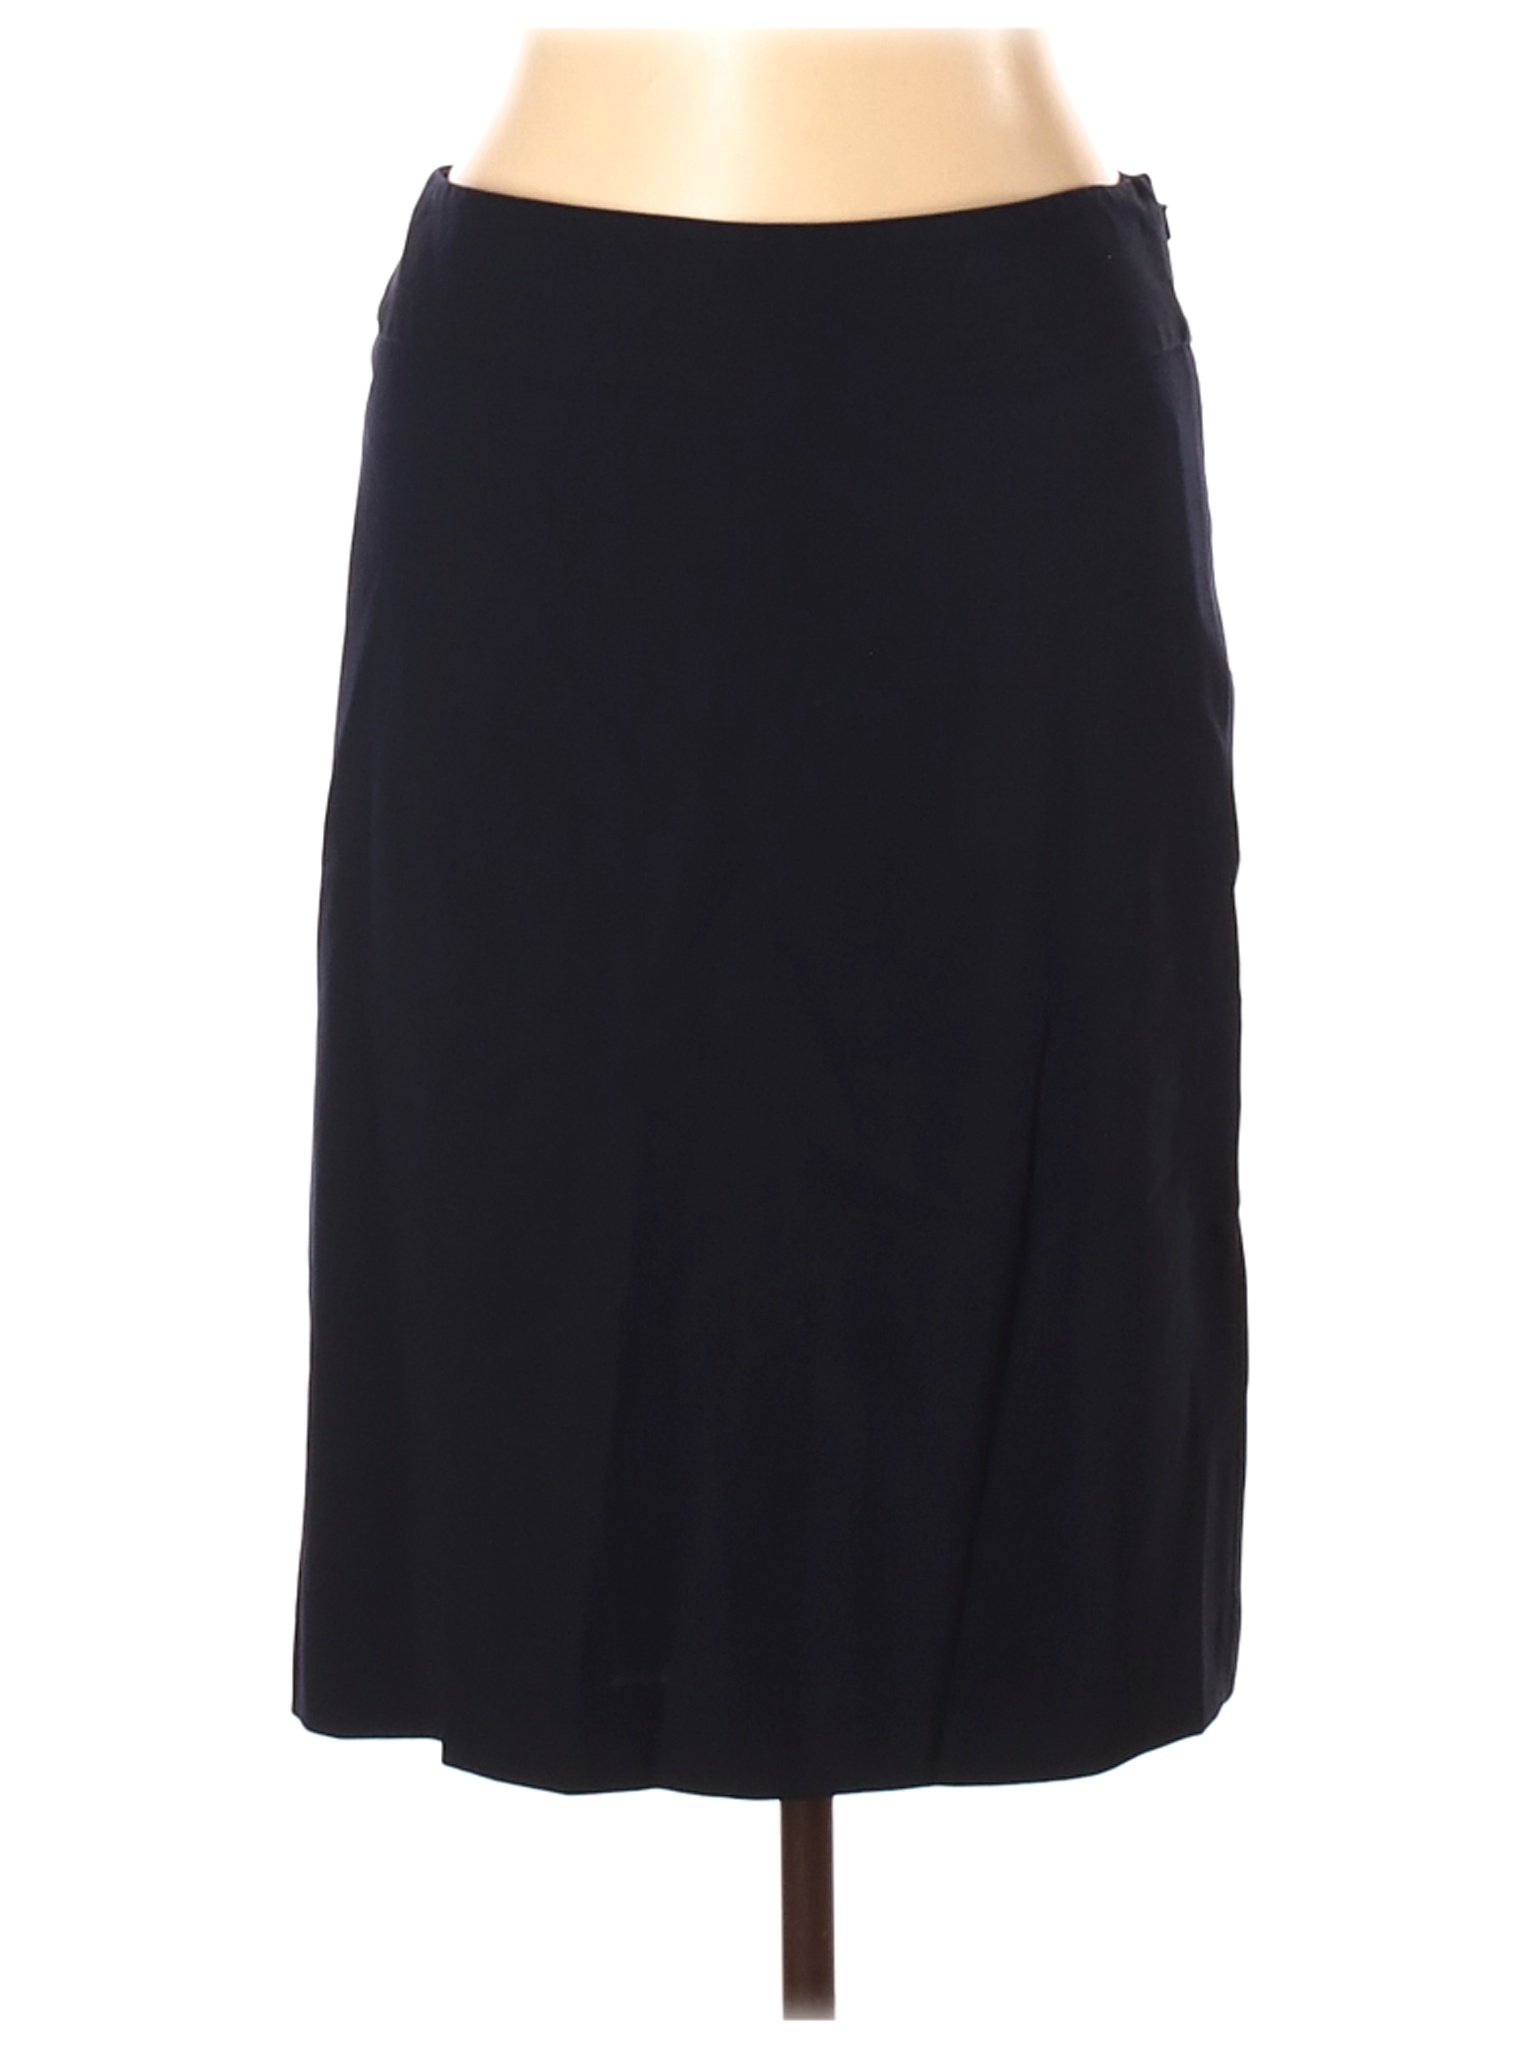 Banana Republic Women Black Wool Skirt 10 | eBay